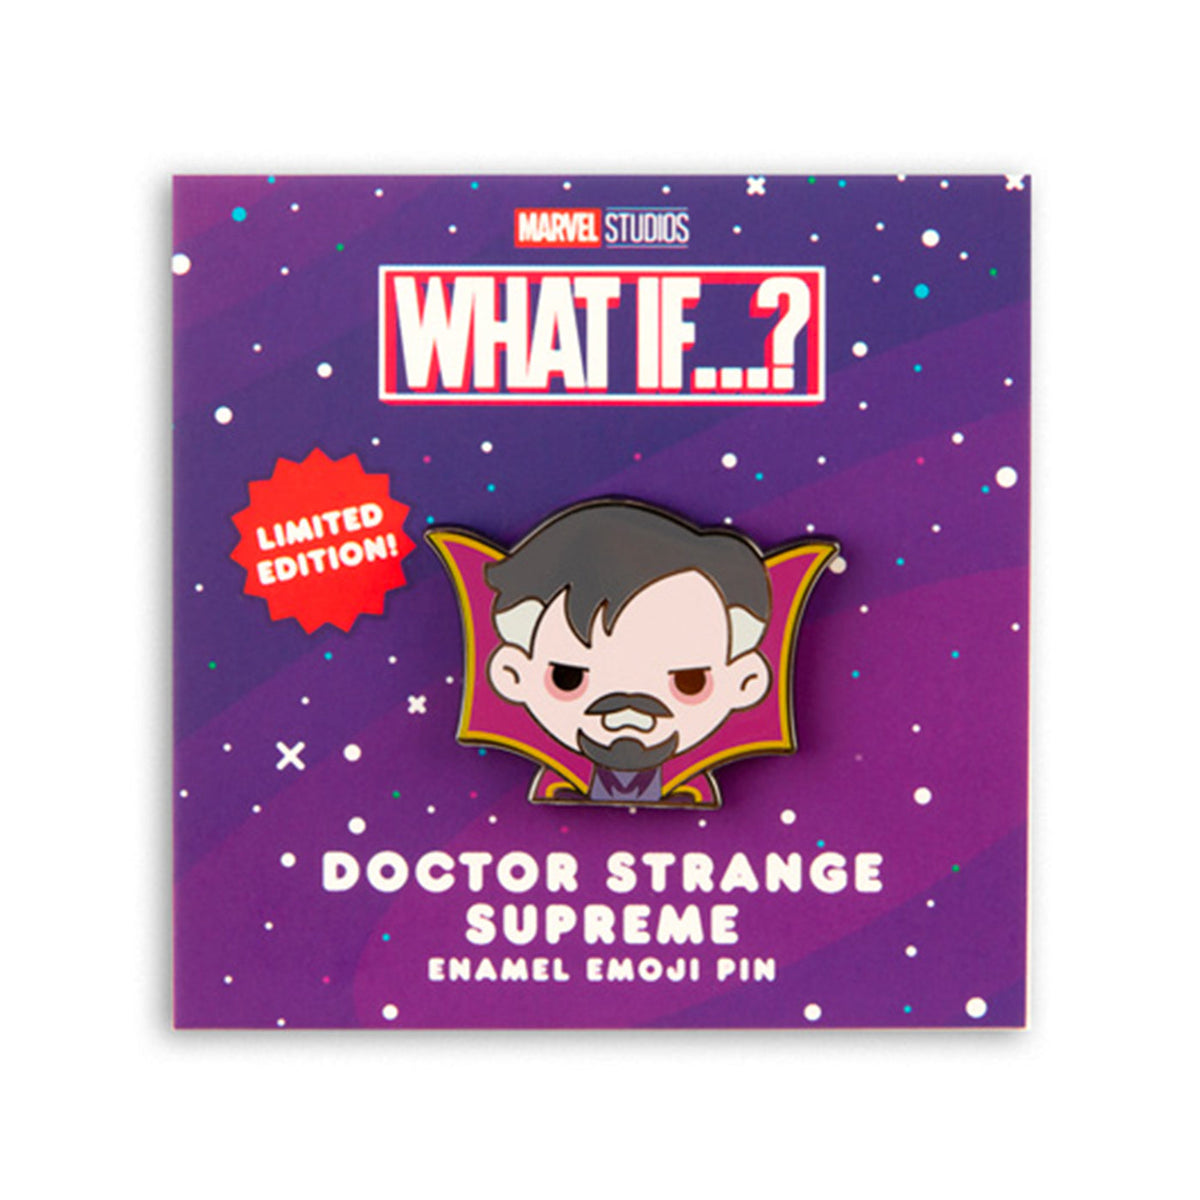 Doctor Strange Supreme Enamel Pin on its card backing. 